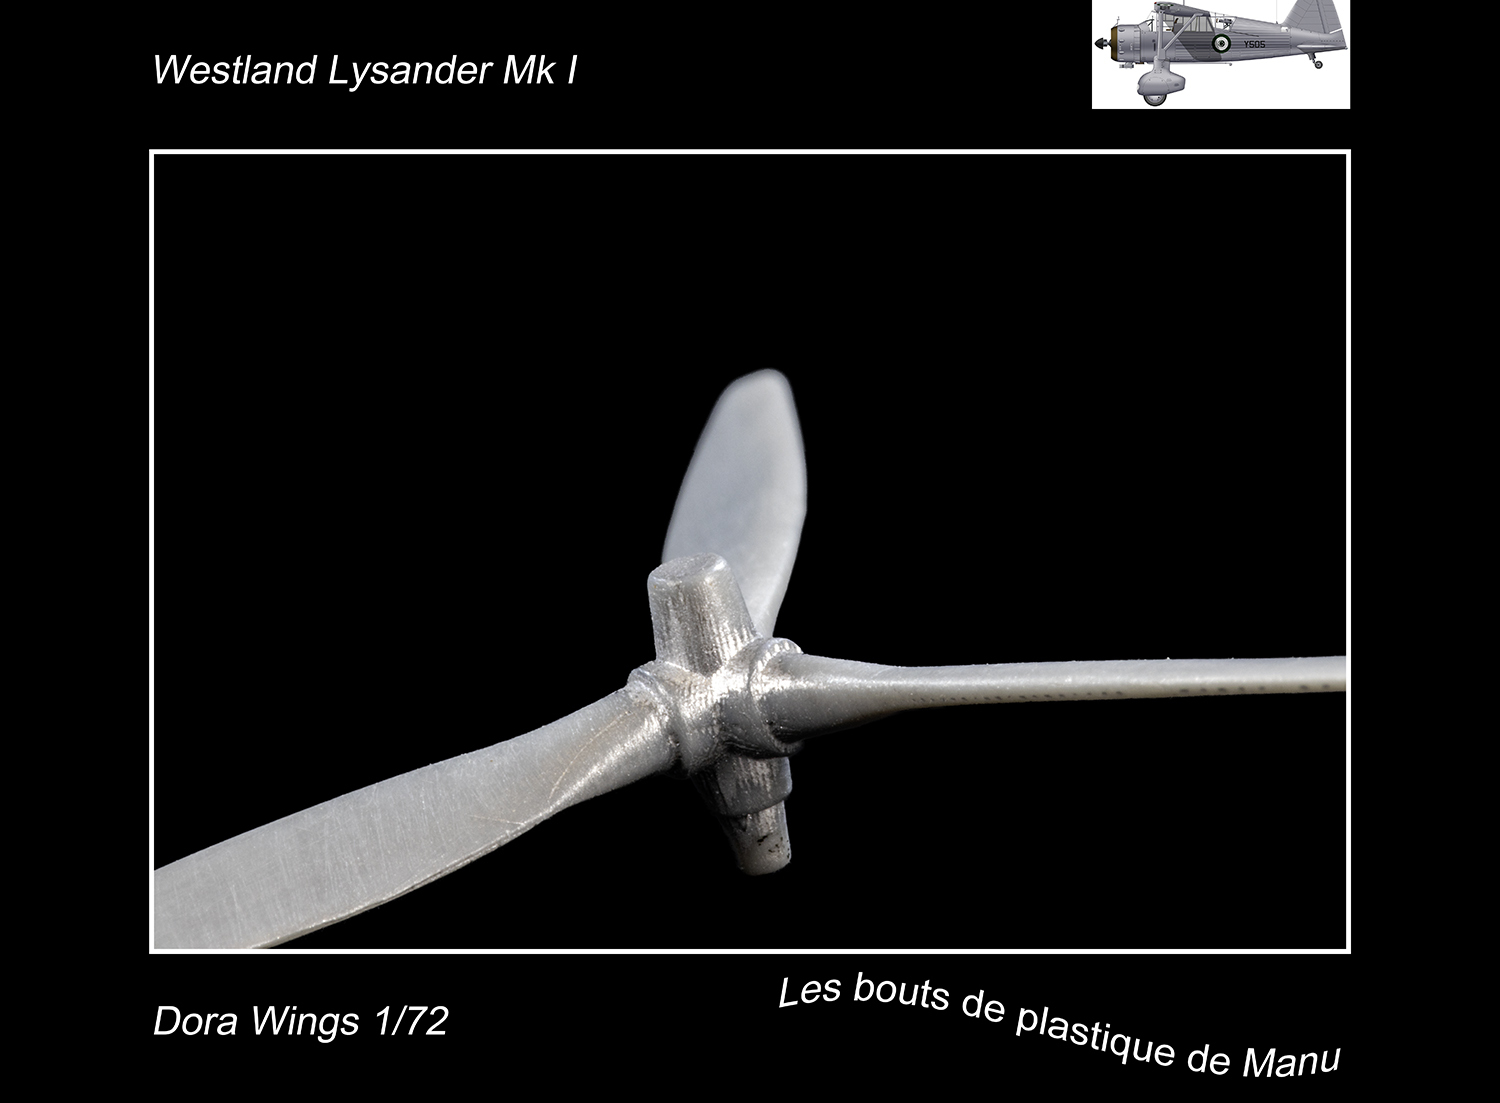 [Dora Wings] Westland Lysander Mk I - Je préfère en rire... - Page 2 Xgzm